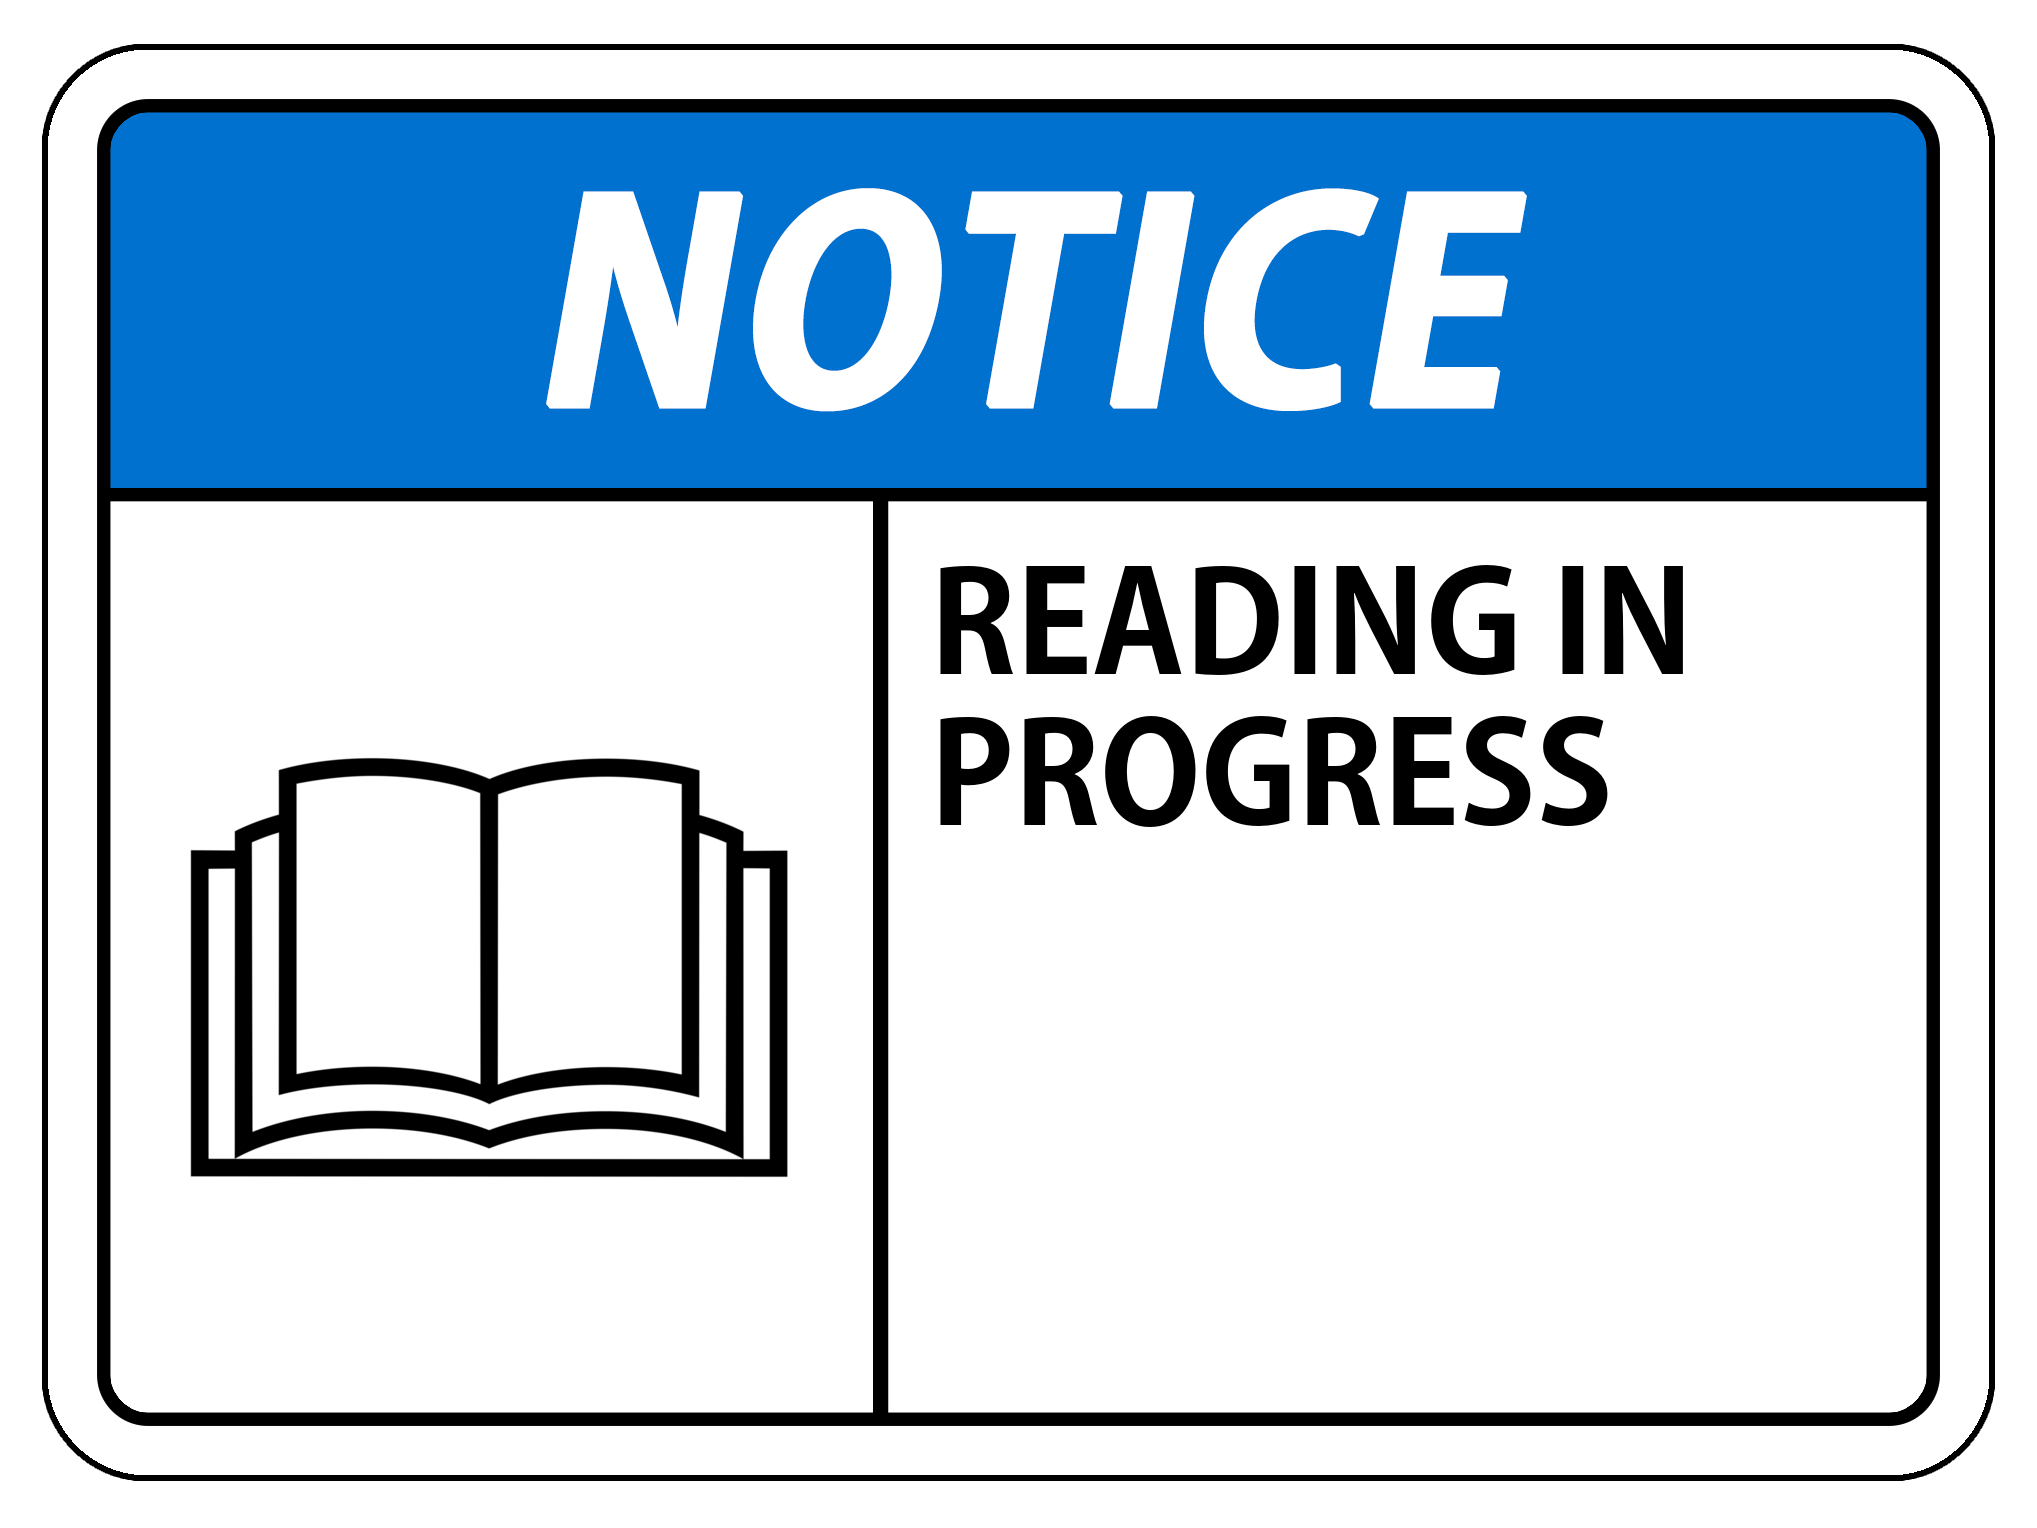 Notice: Reading in Progress